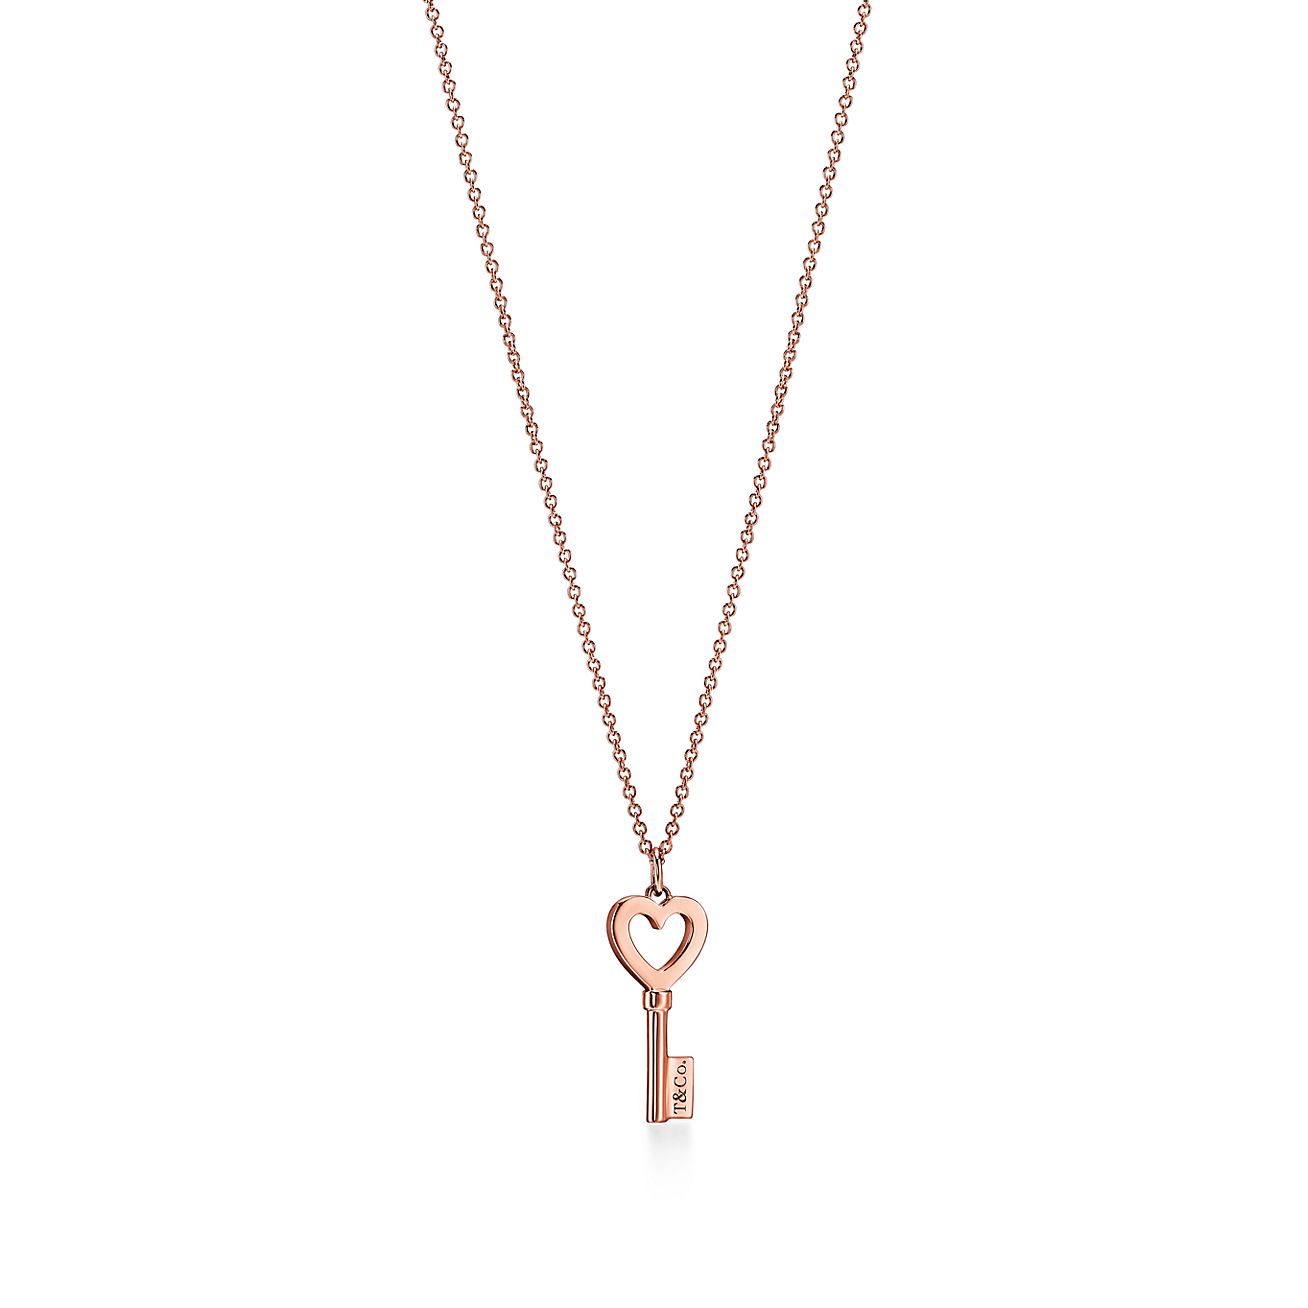 Tiffany Limited Edition Tiffany Keys Mini Crown Key Charm Pink Crystal  Womens Rosed Gold Diamonds Necklace